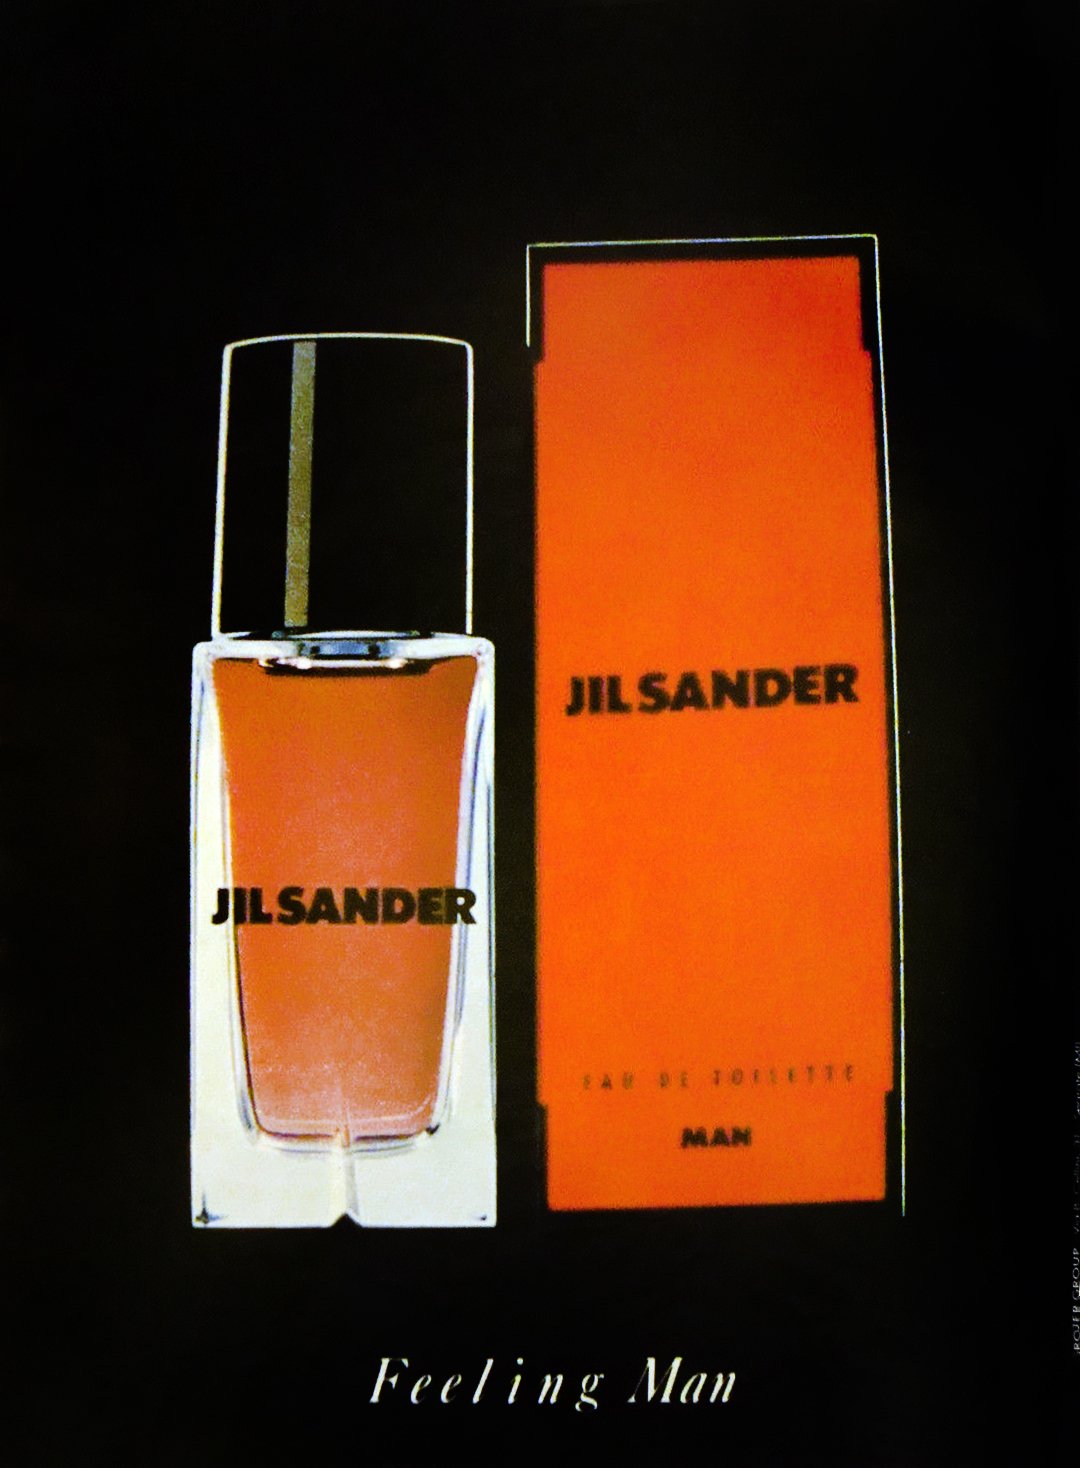 Jil Sander - Man 1989 / Feeling Man Eau de Toilette » Reviews